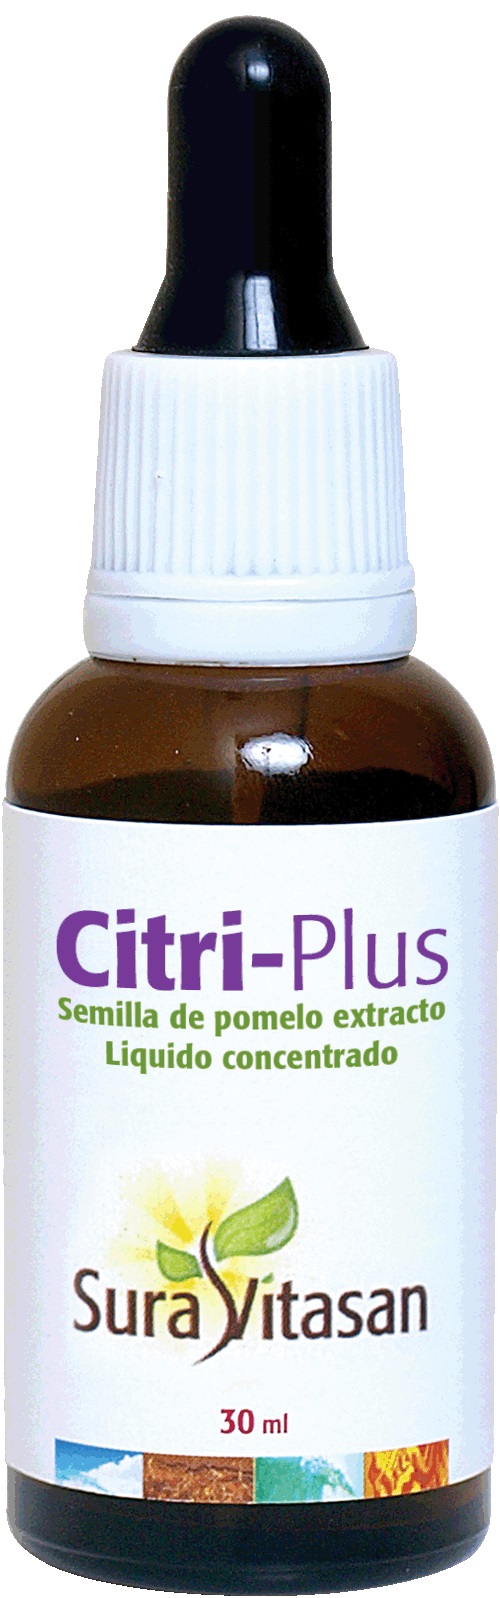 Sura Vitasan Citri-Plus, 30 ml. Acción antimicrobiana.